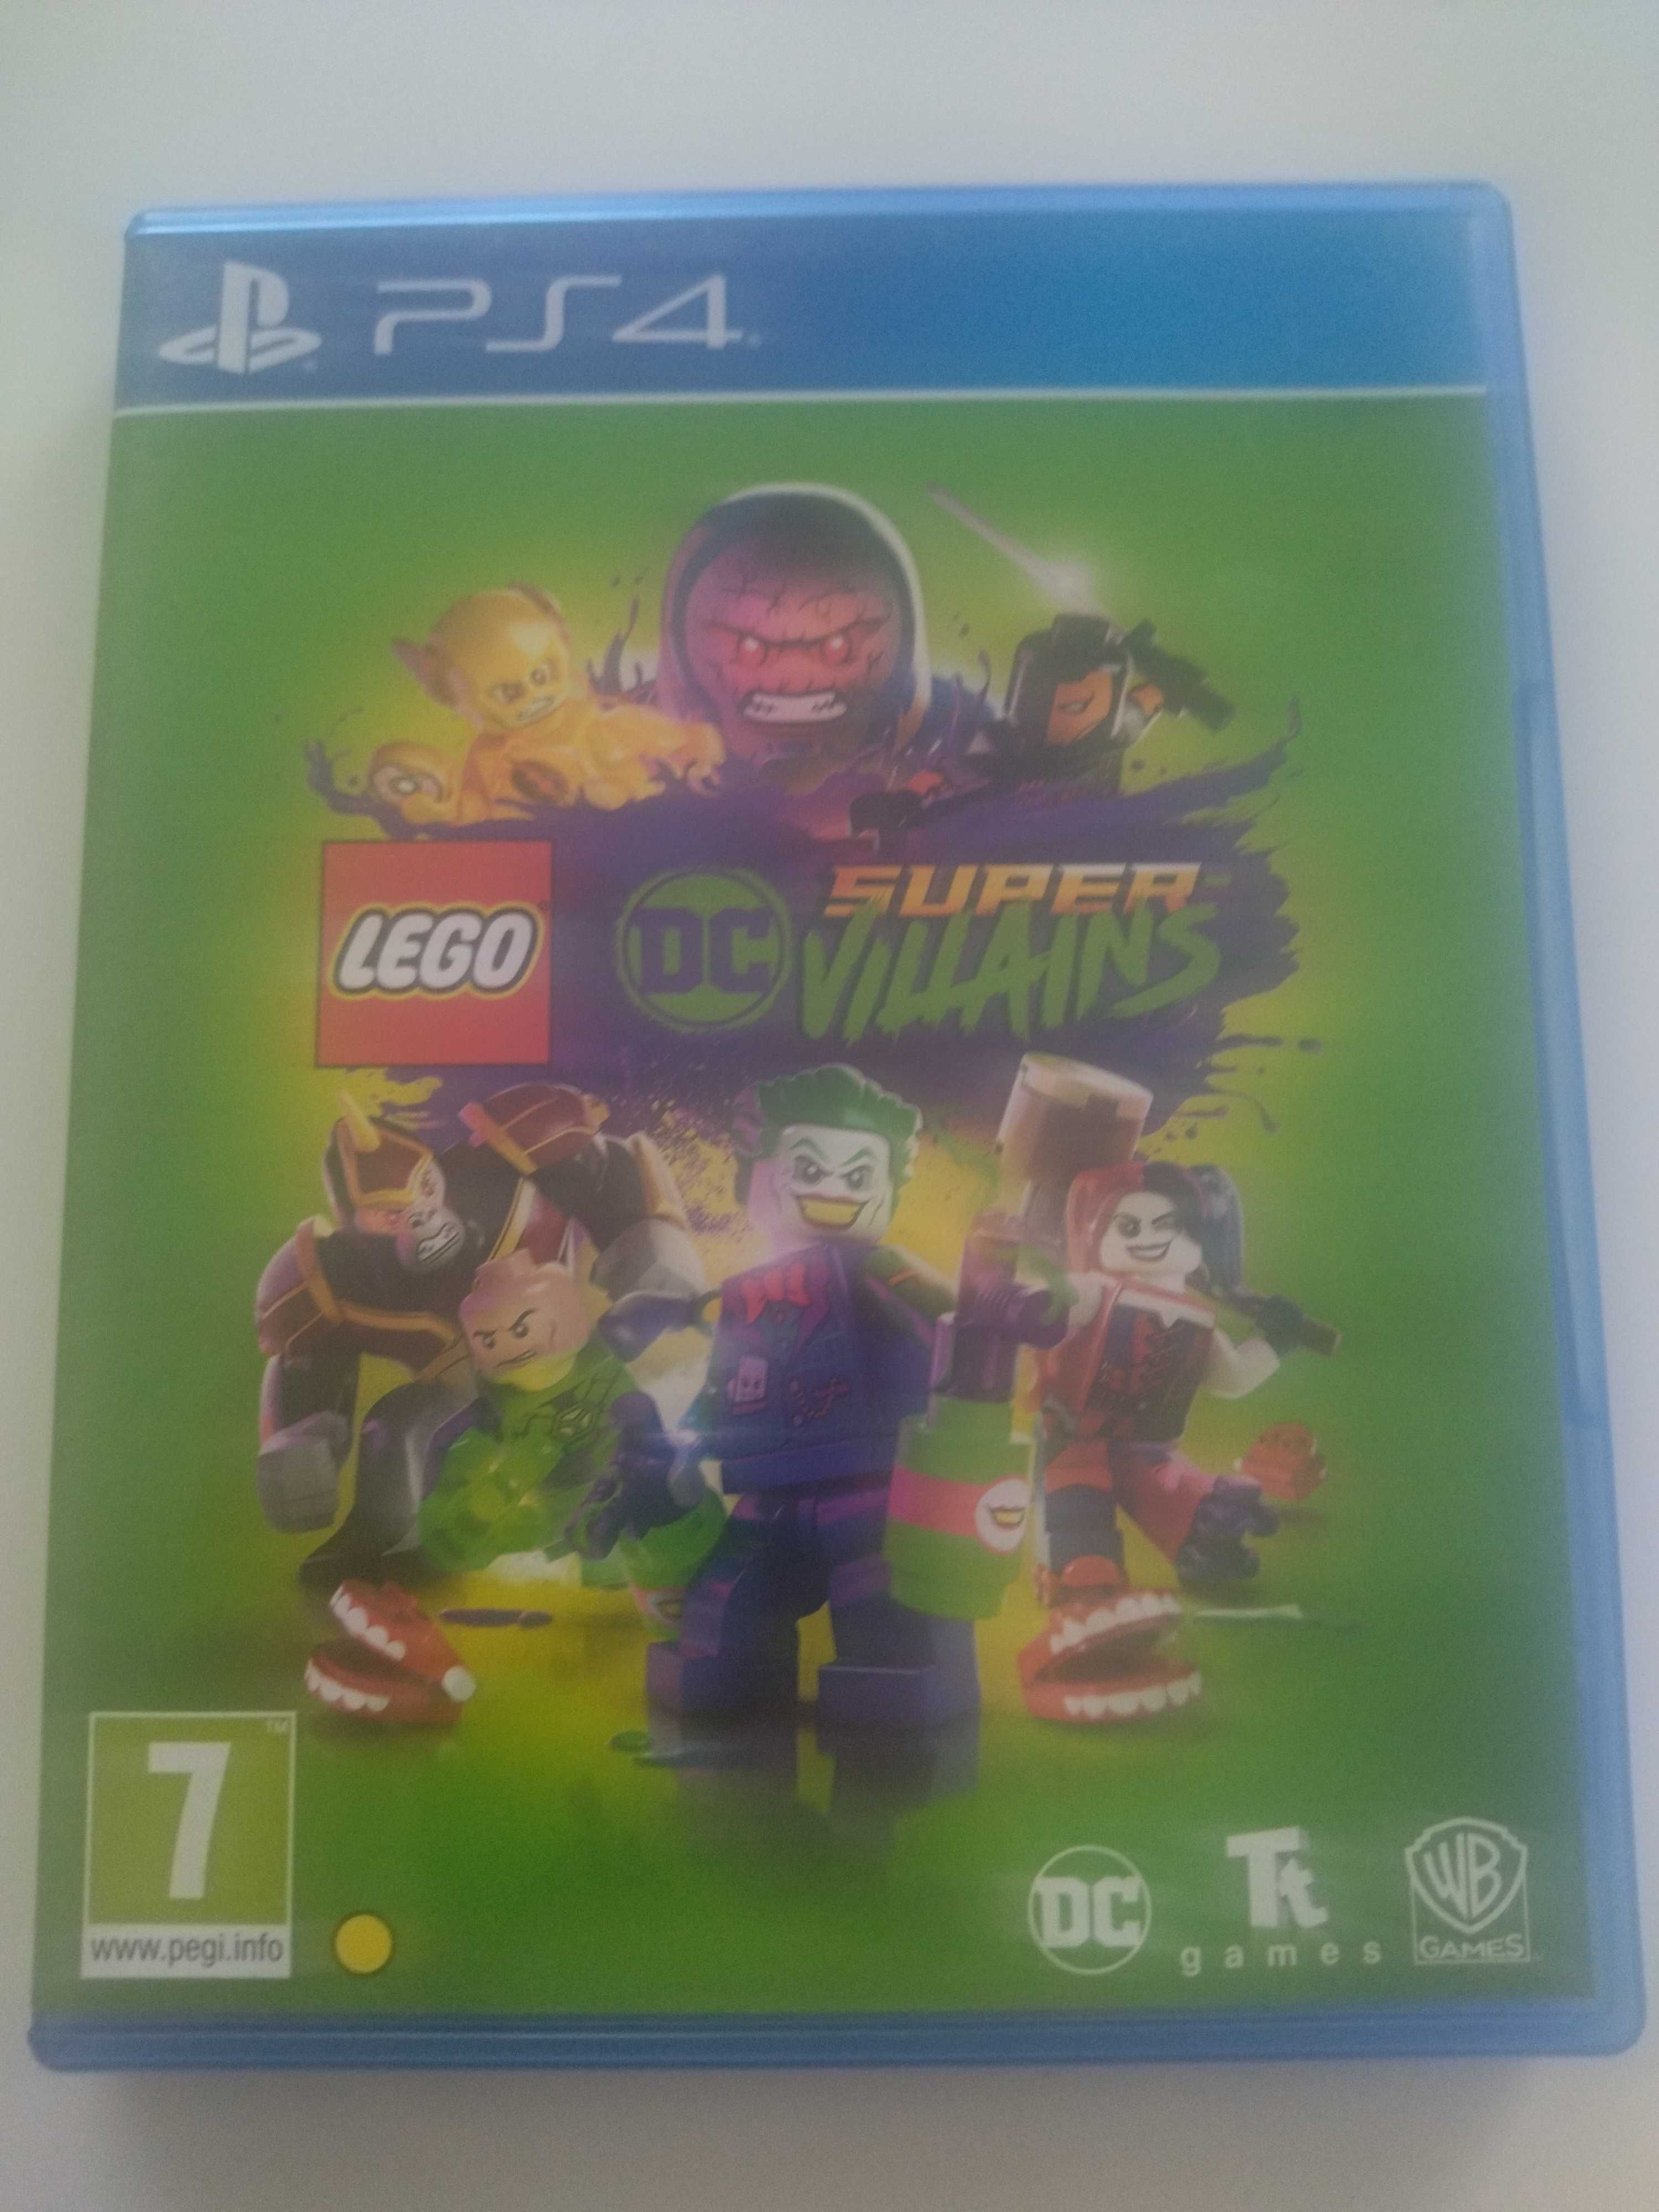 LEGO DC super villains PS4